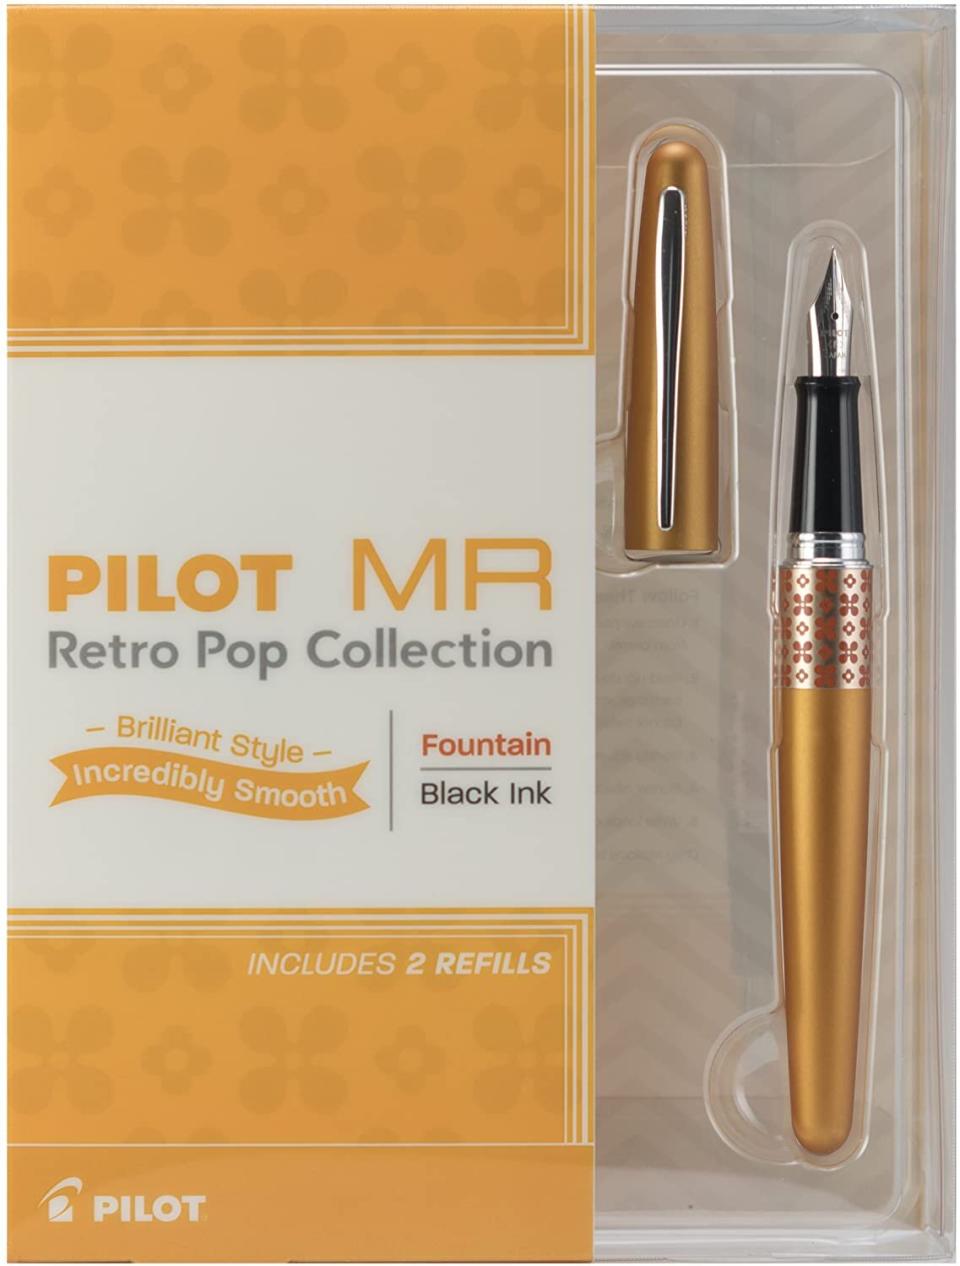 Pilot MR fountain pen